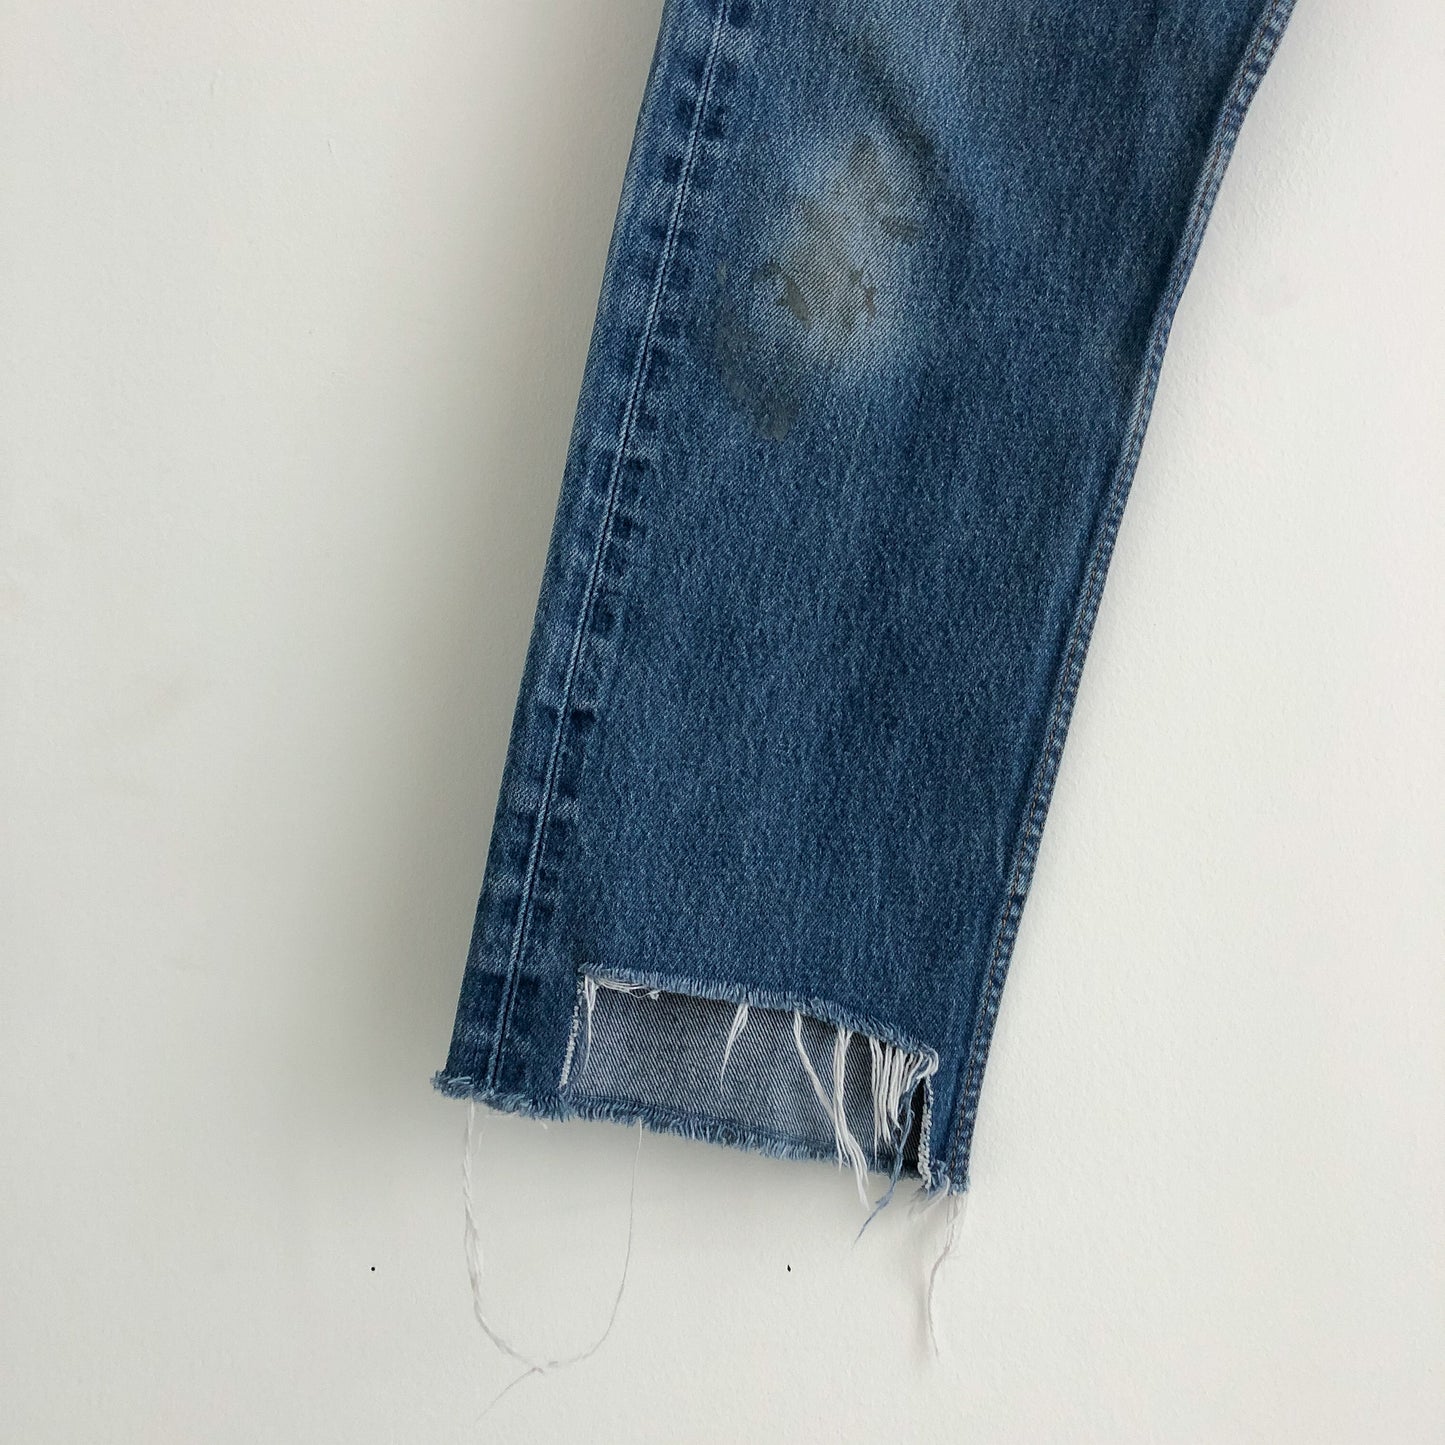 Vintage Levi’s 501s Cutoff Jeans